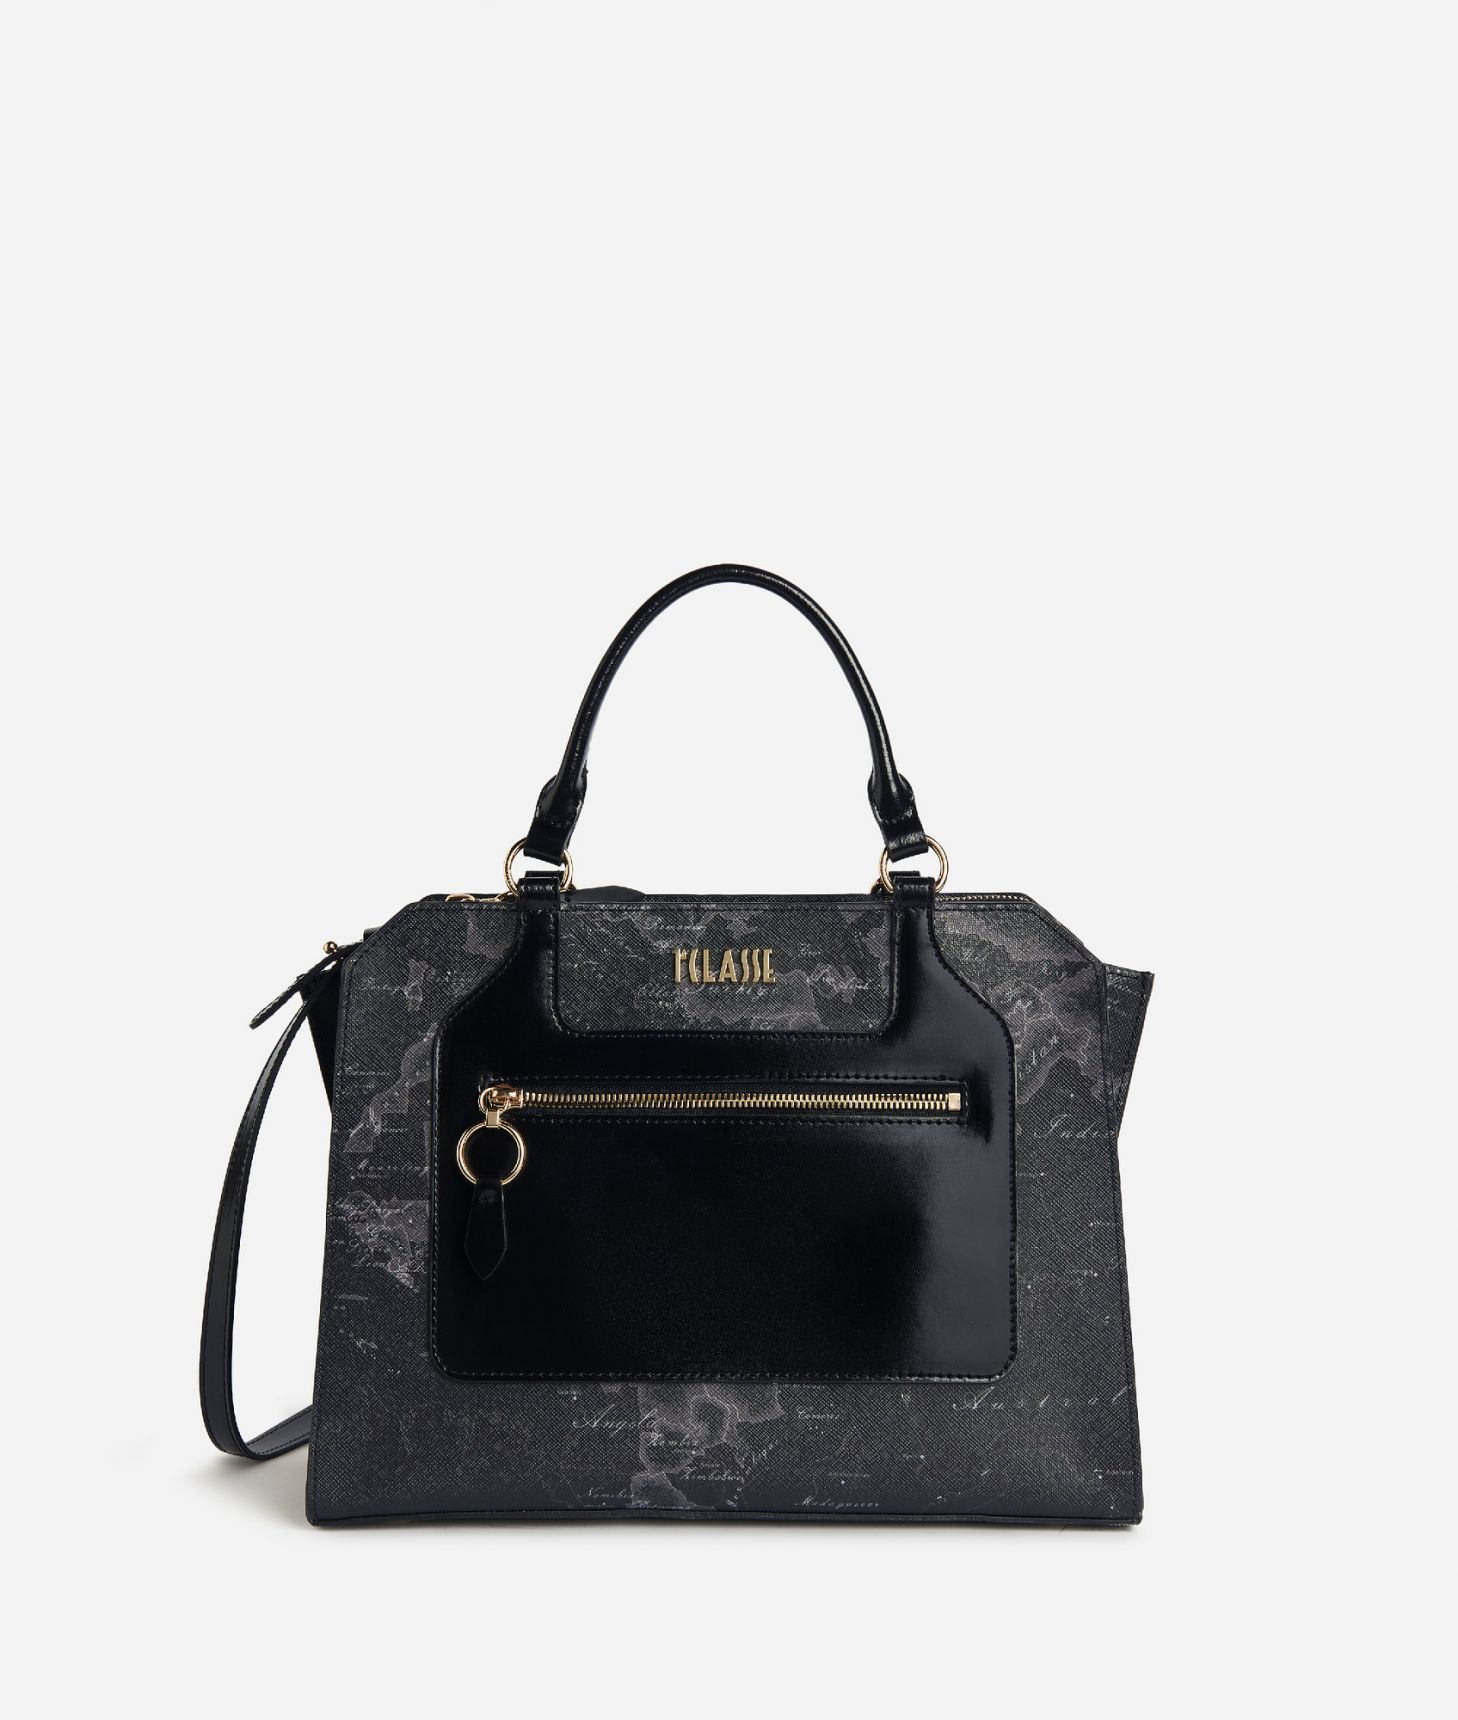 Kissme Bag handbag with crossbody strap Black,front